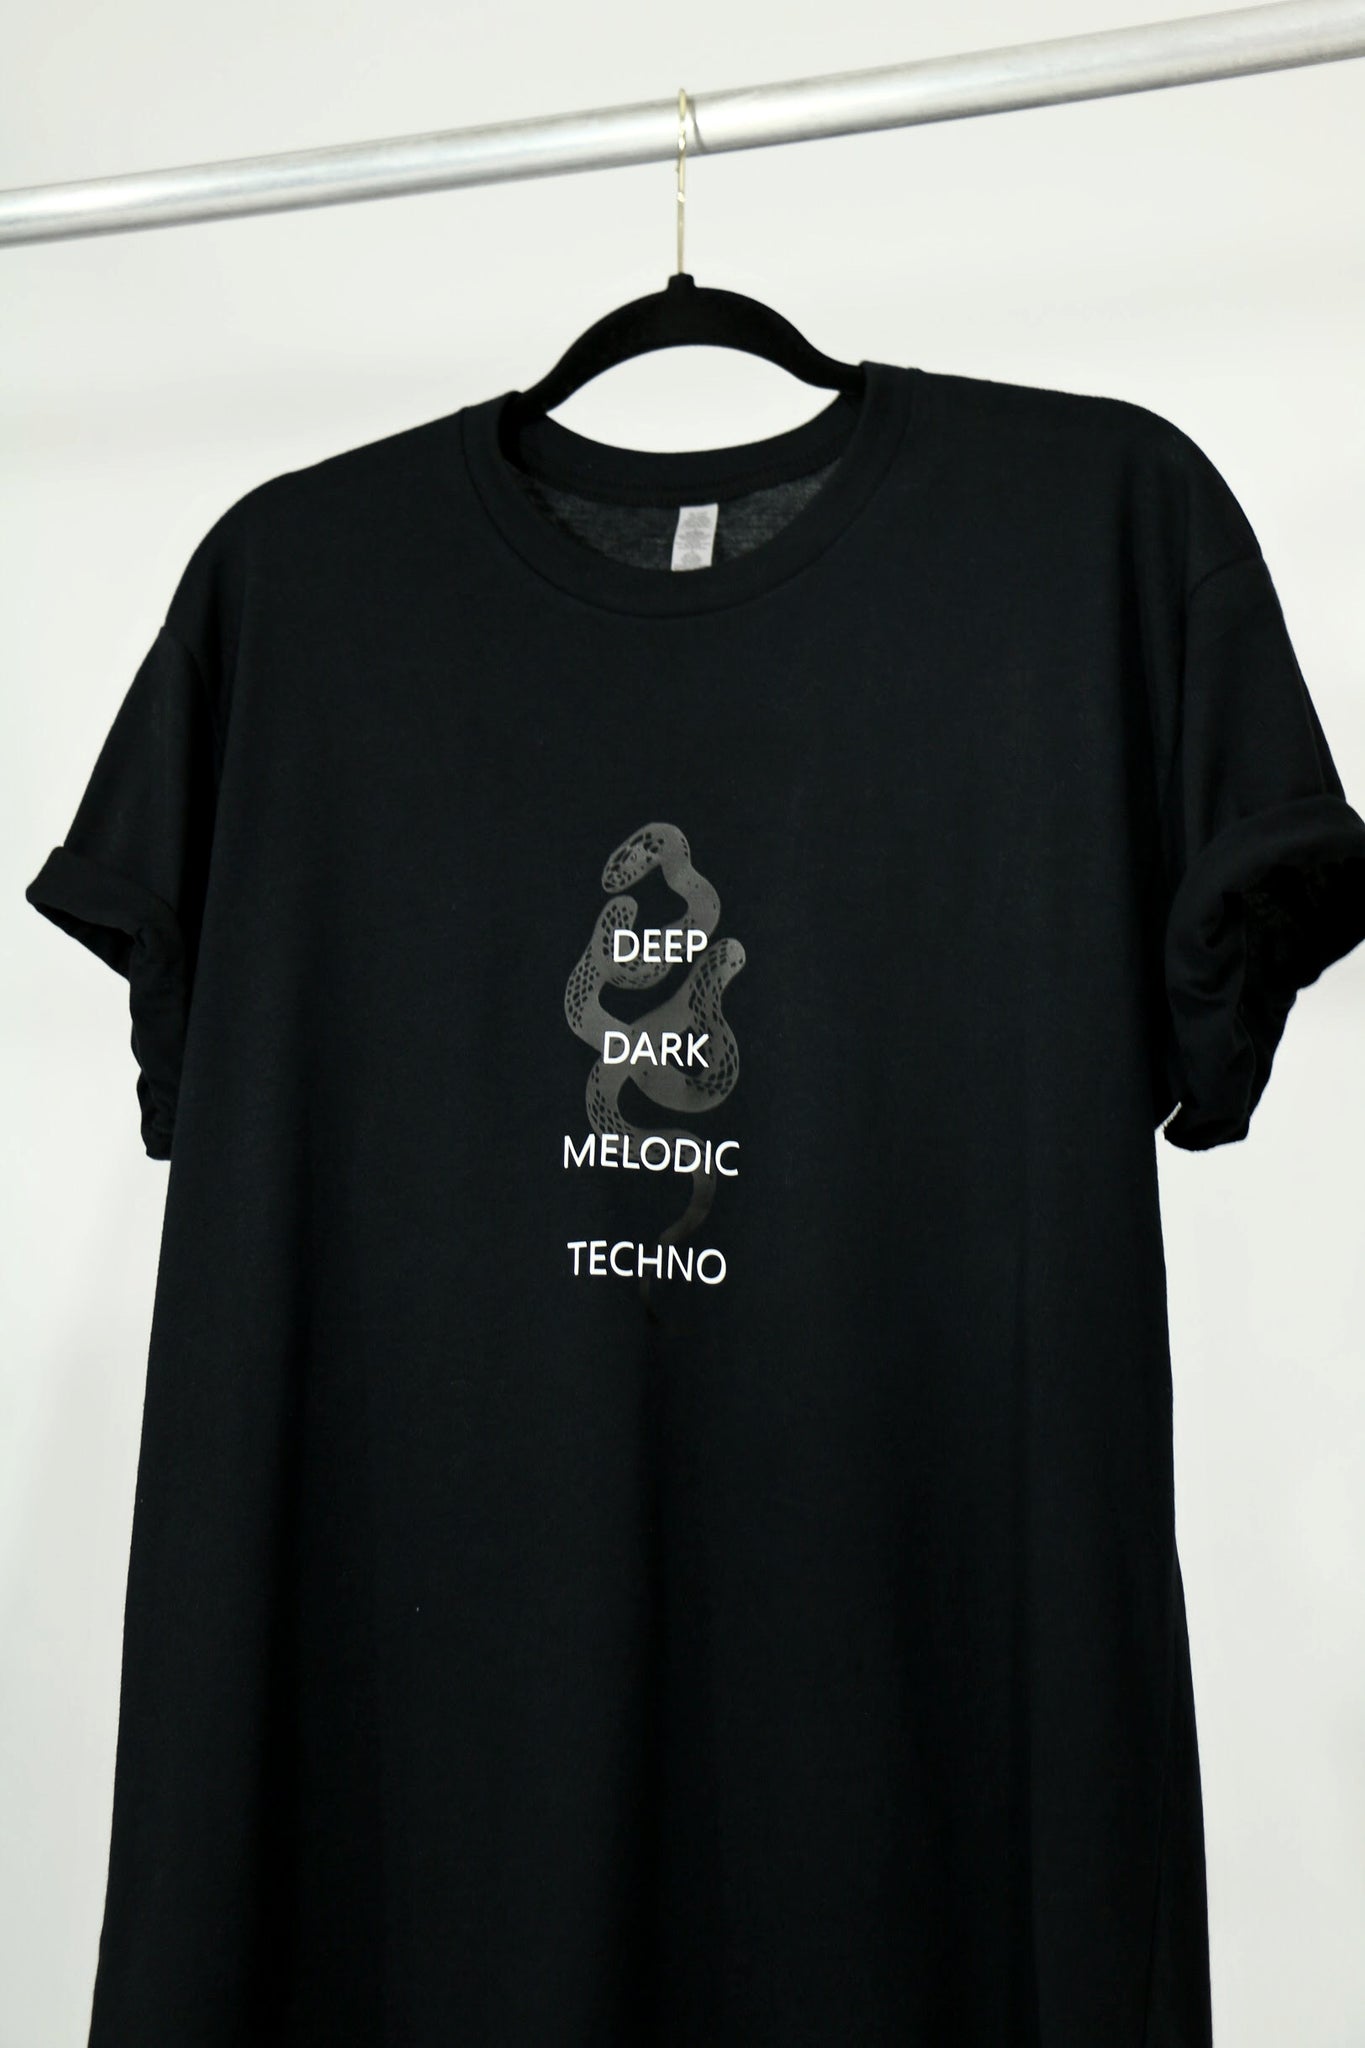 Melodic Techno T-Shirt